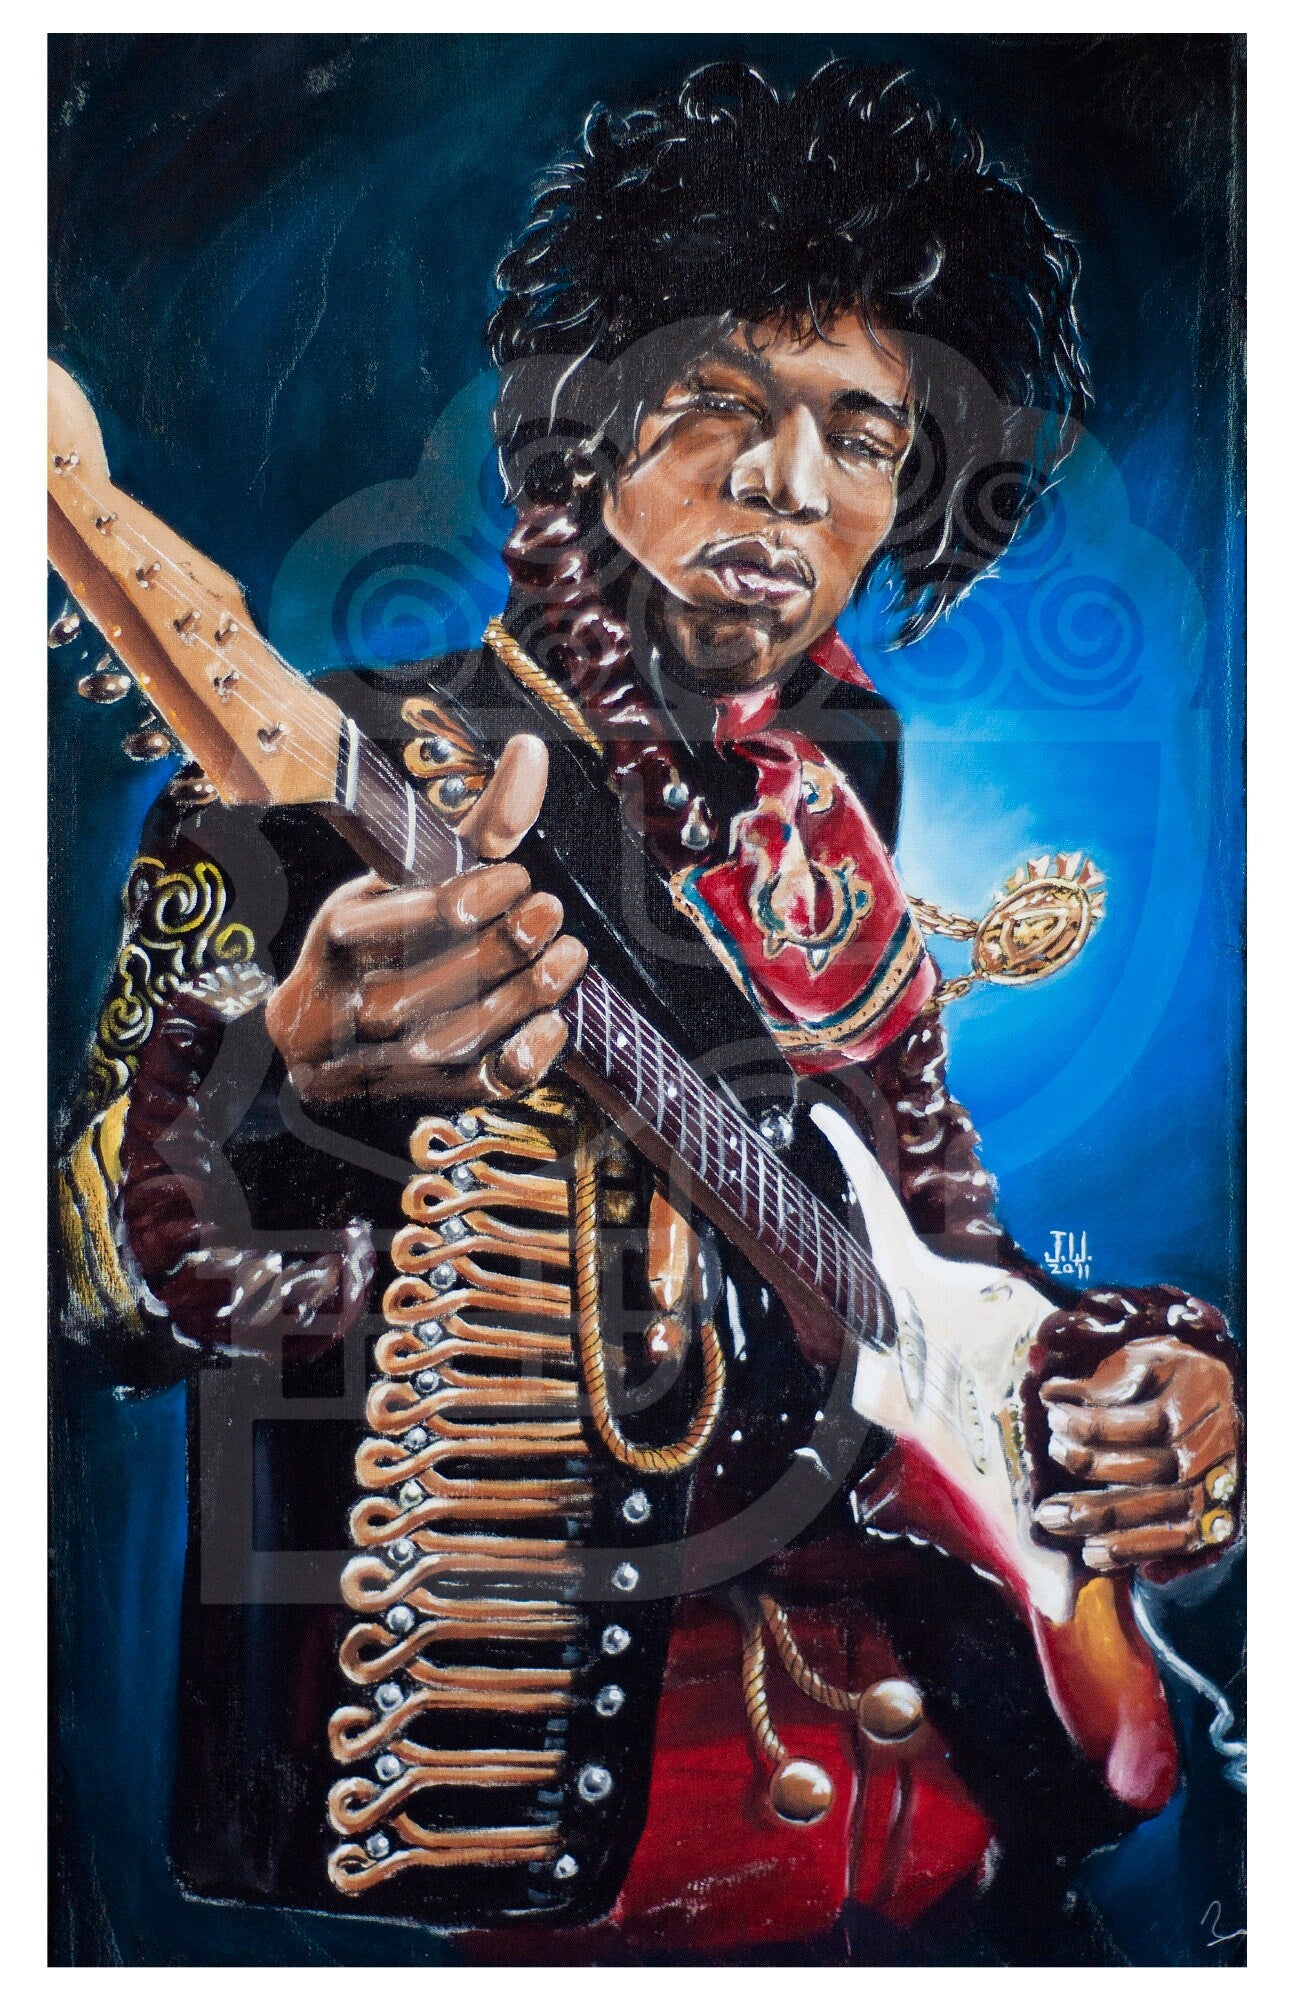 NEW Jimi Hendrix Rocks Original Artwork Signed Print Canvas wall studio room Music legend guitar hero musician fender cosplay jacket